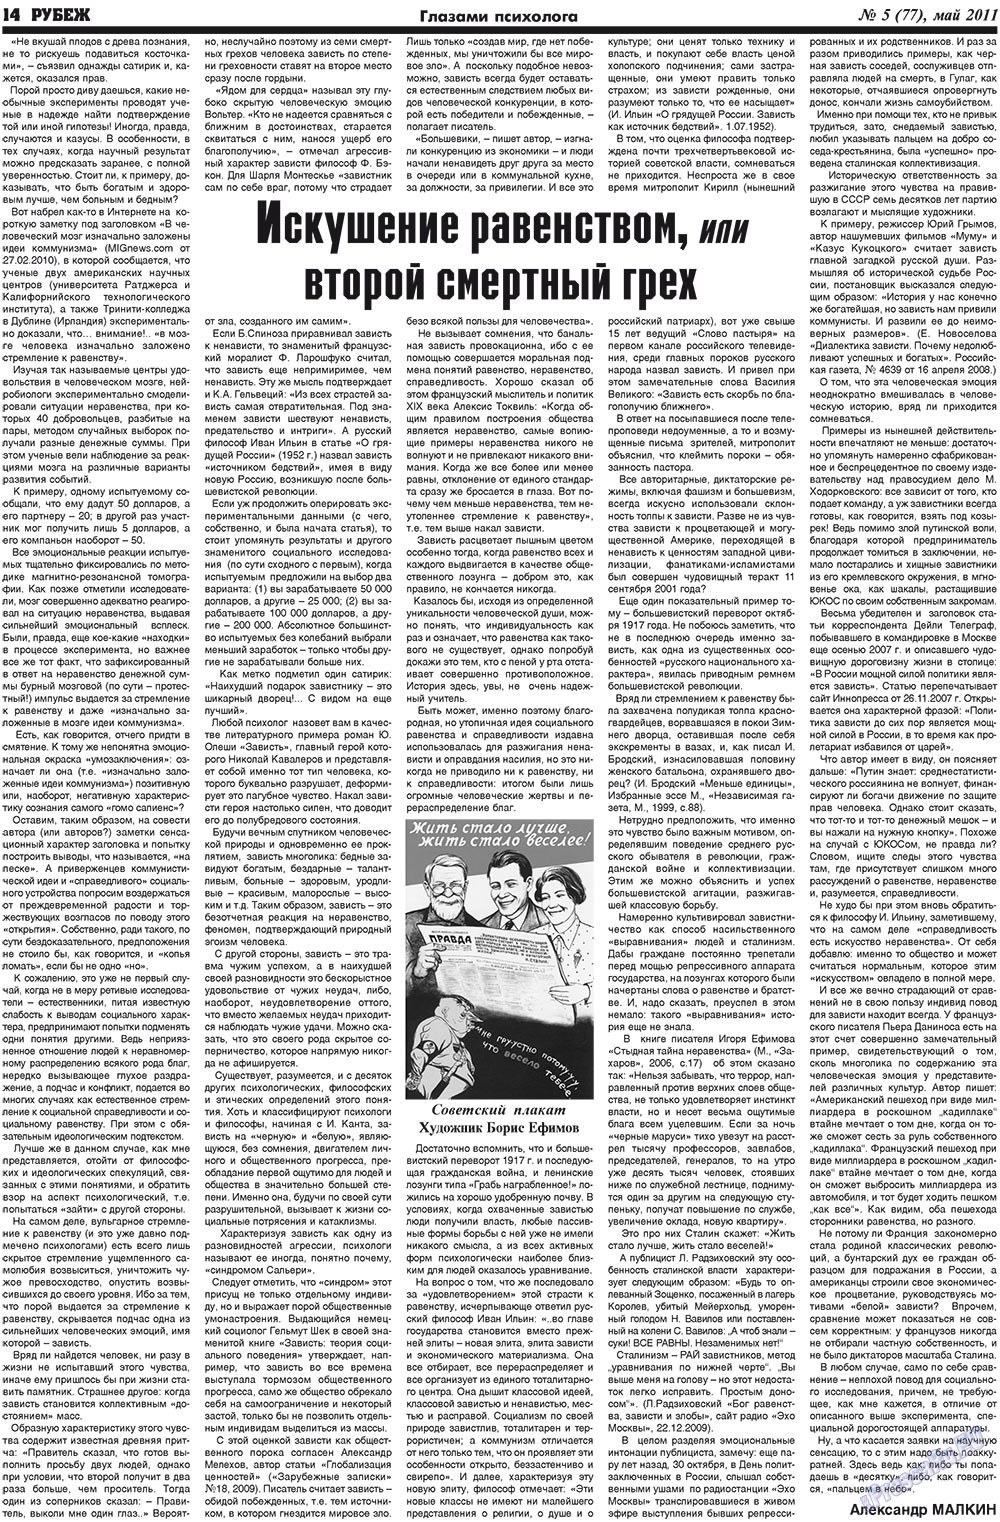 Рубеж, газета. 2011 №5 стр.14